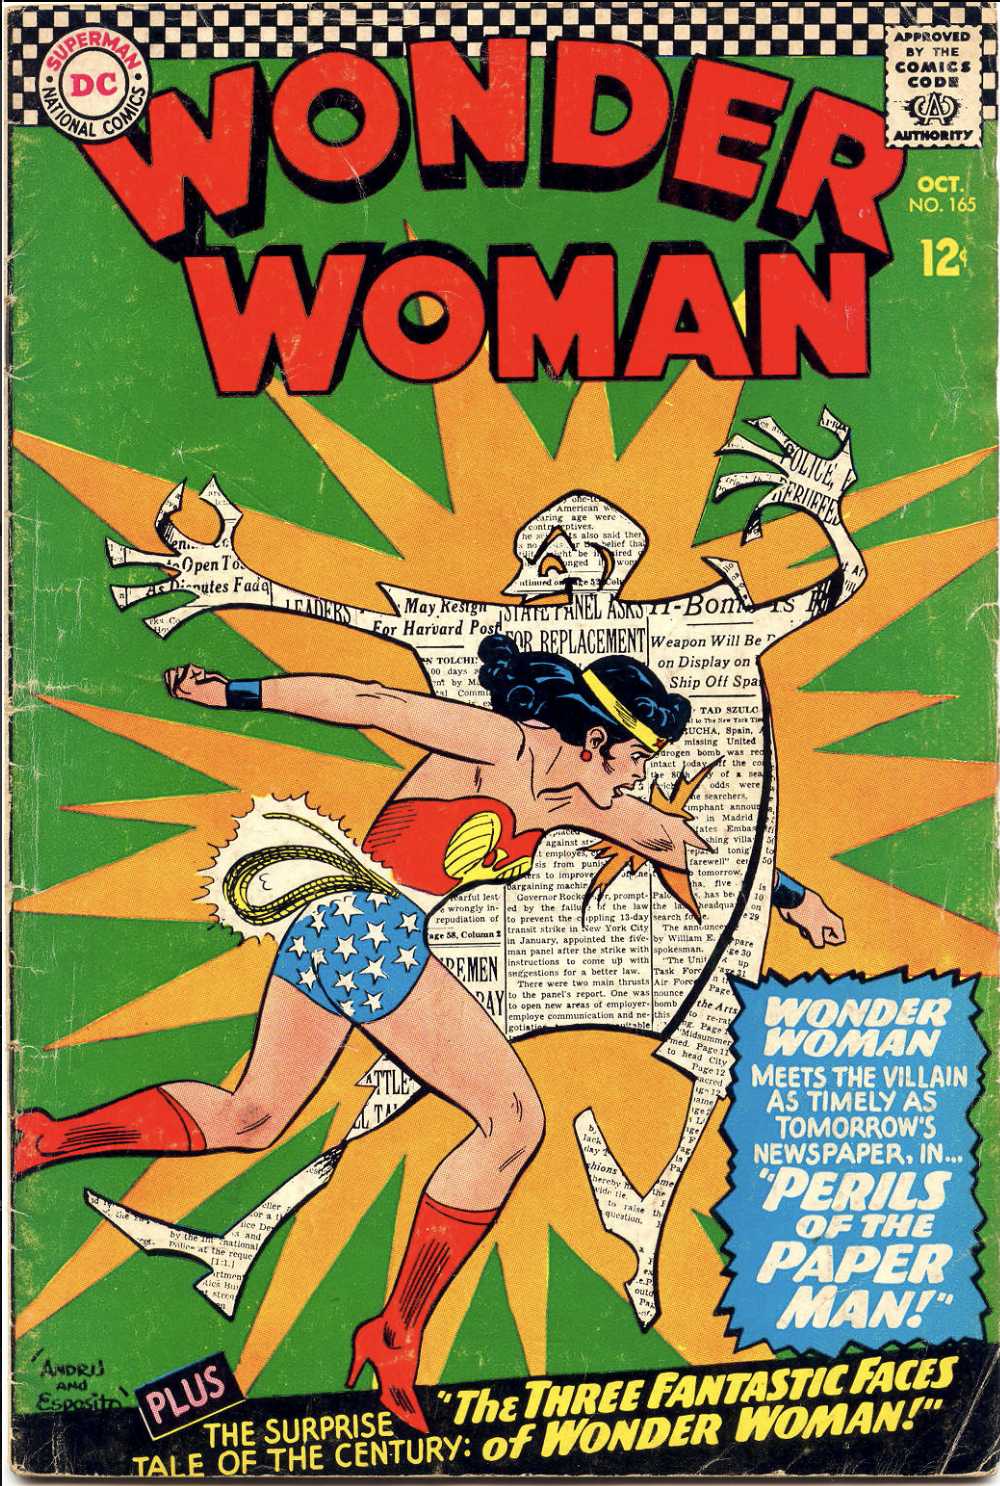 Will Wonders Never Crease (Wonder Woman 165)